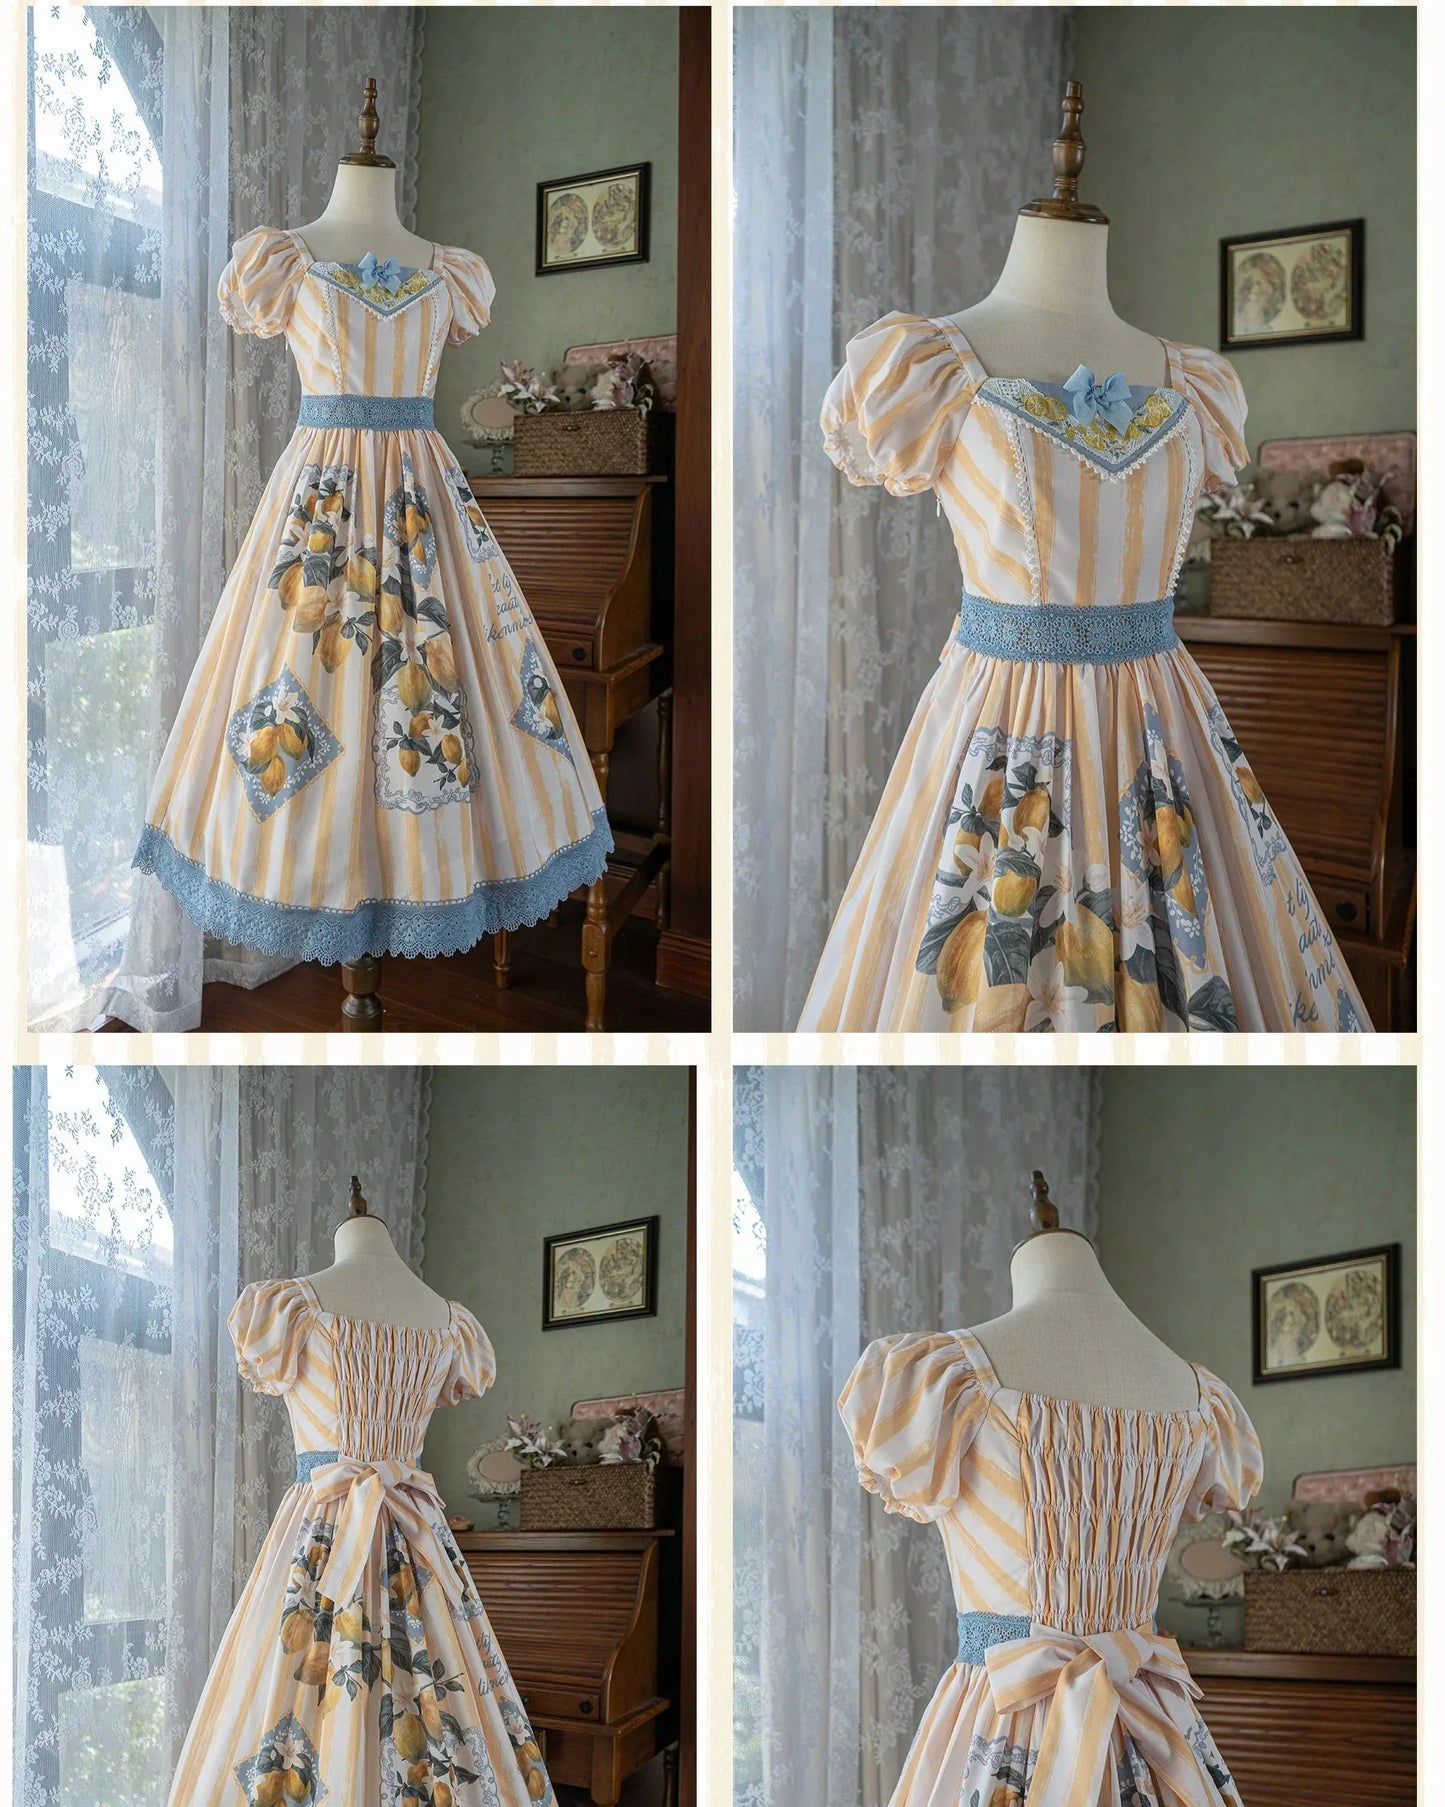 [Pre-orders available until 5/10] Lemon Island short-sleeved dress